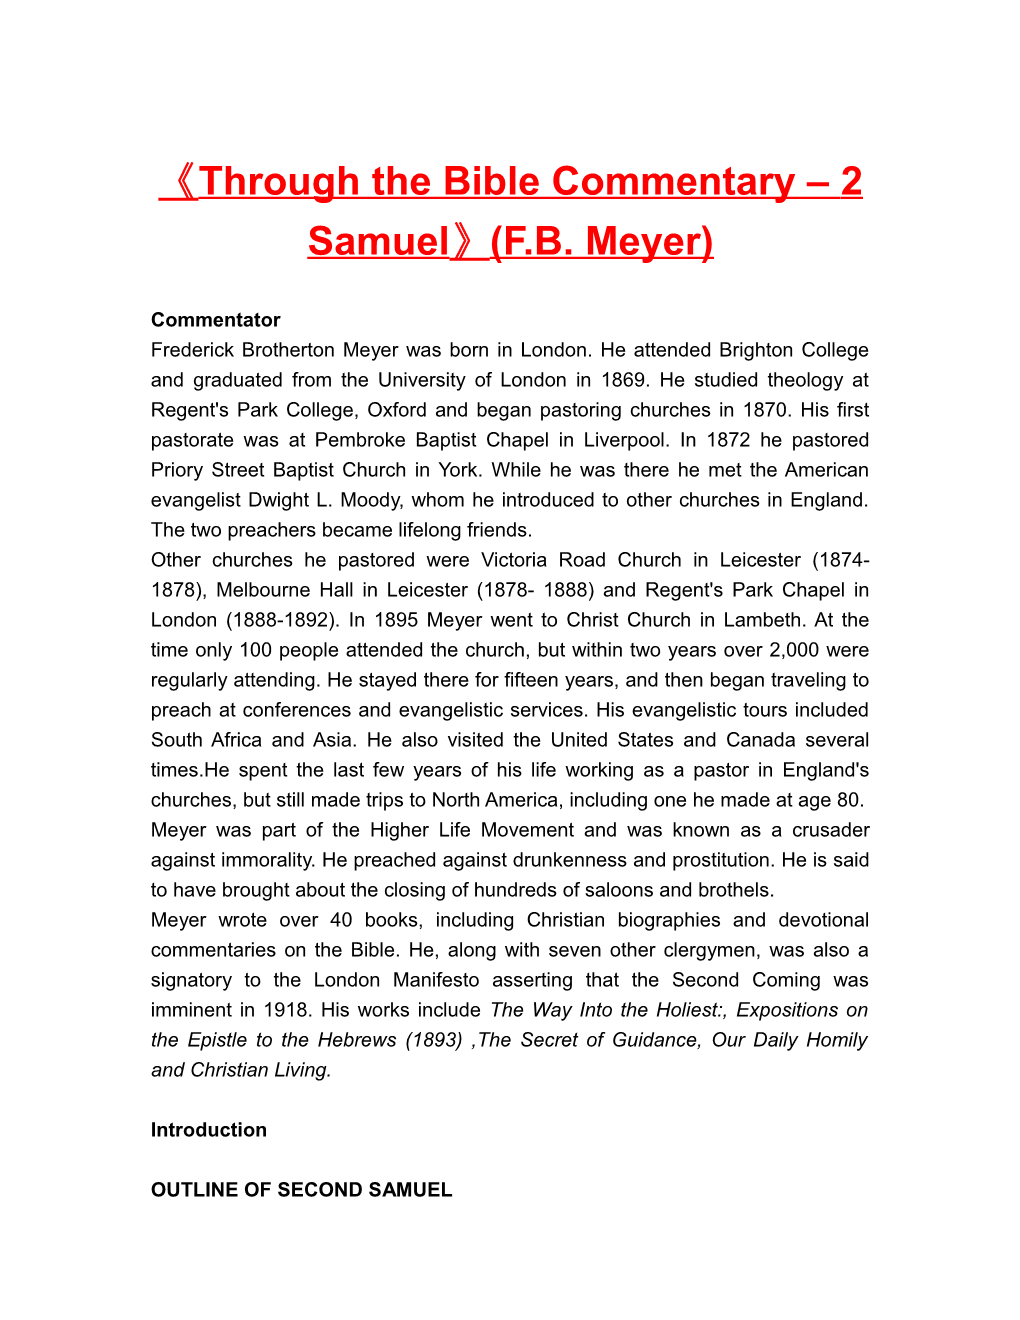 Through the Bible Commentary 2 Samuel (F.B. Meyer)